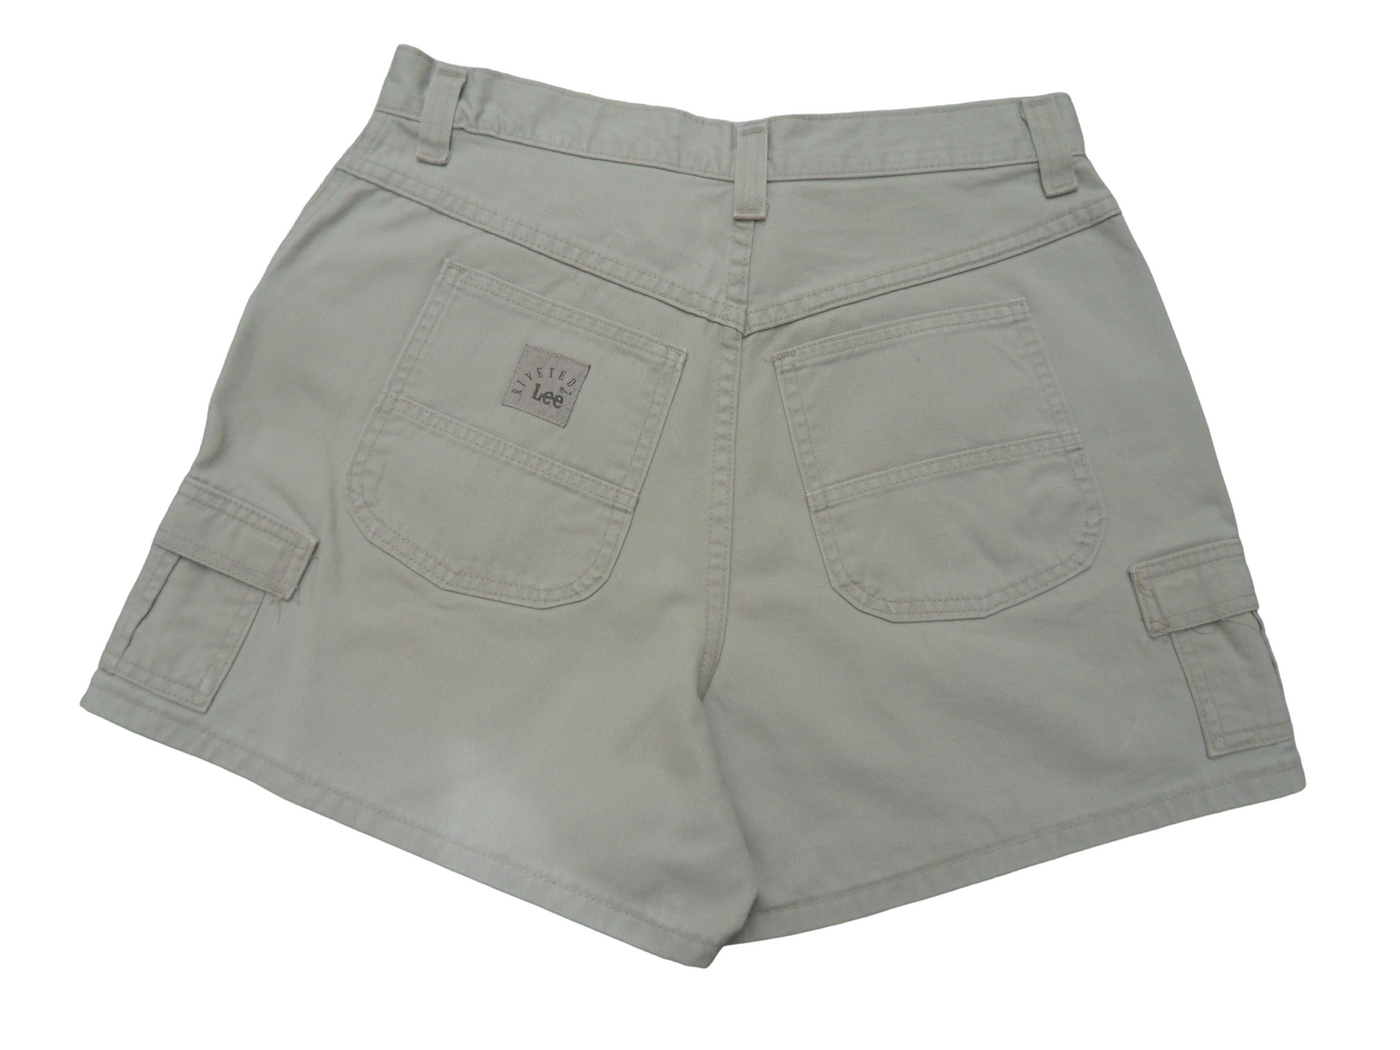 Vintage Riveted LEE Taupe Cotton Women's Cargo shorts Size 12/14 (AU)